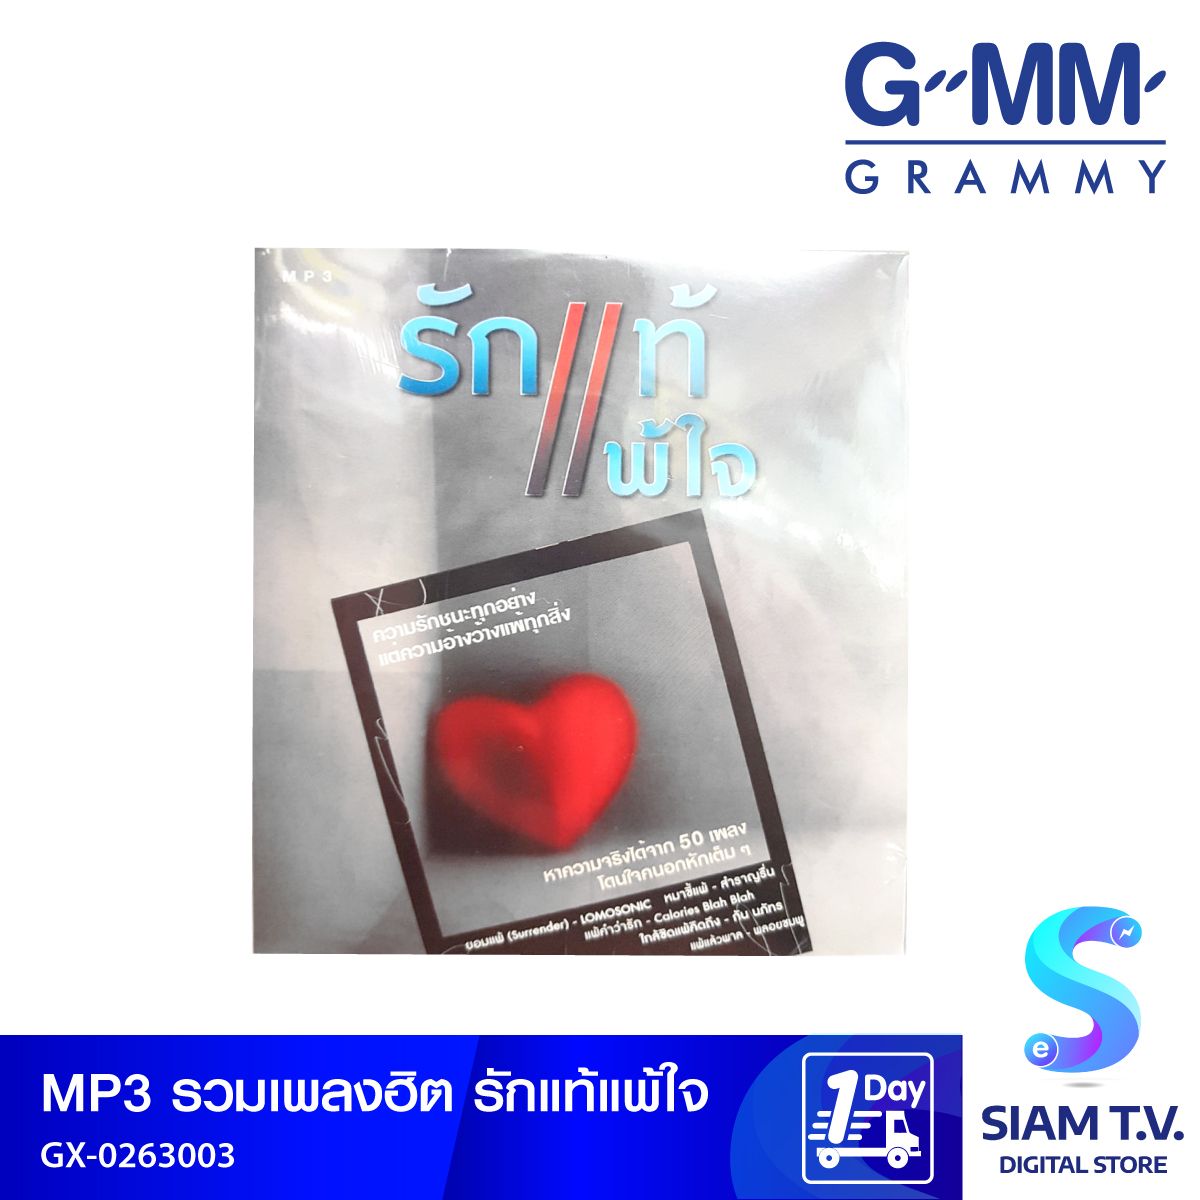 GMM GRAMMY  MP3 รวมเพลงฮิต รักแท้แพ้ใจ